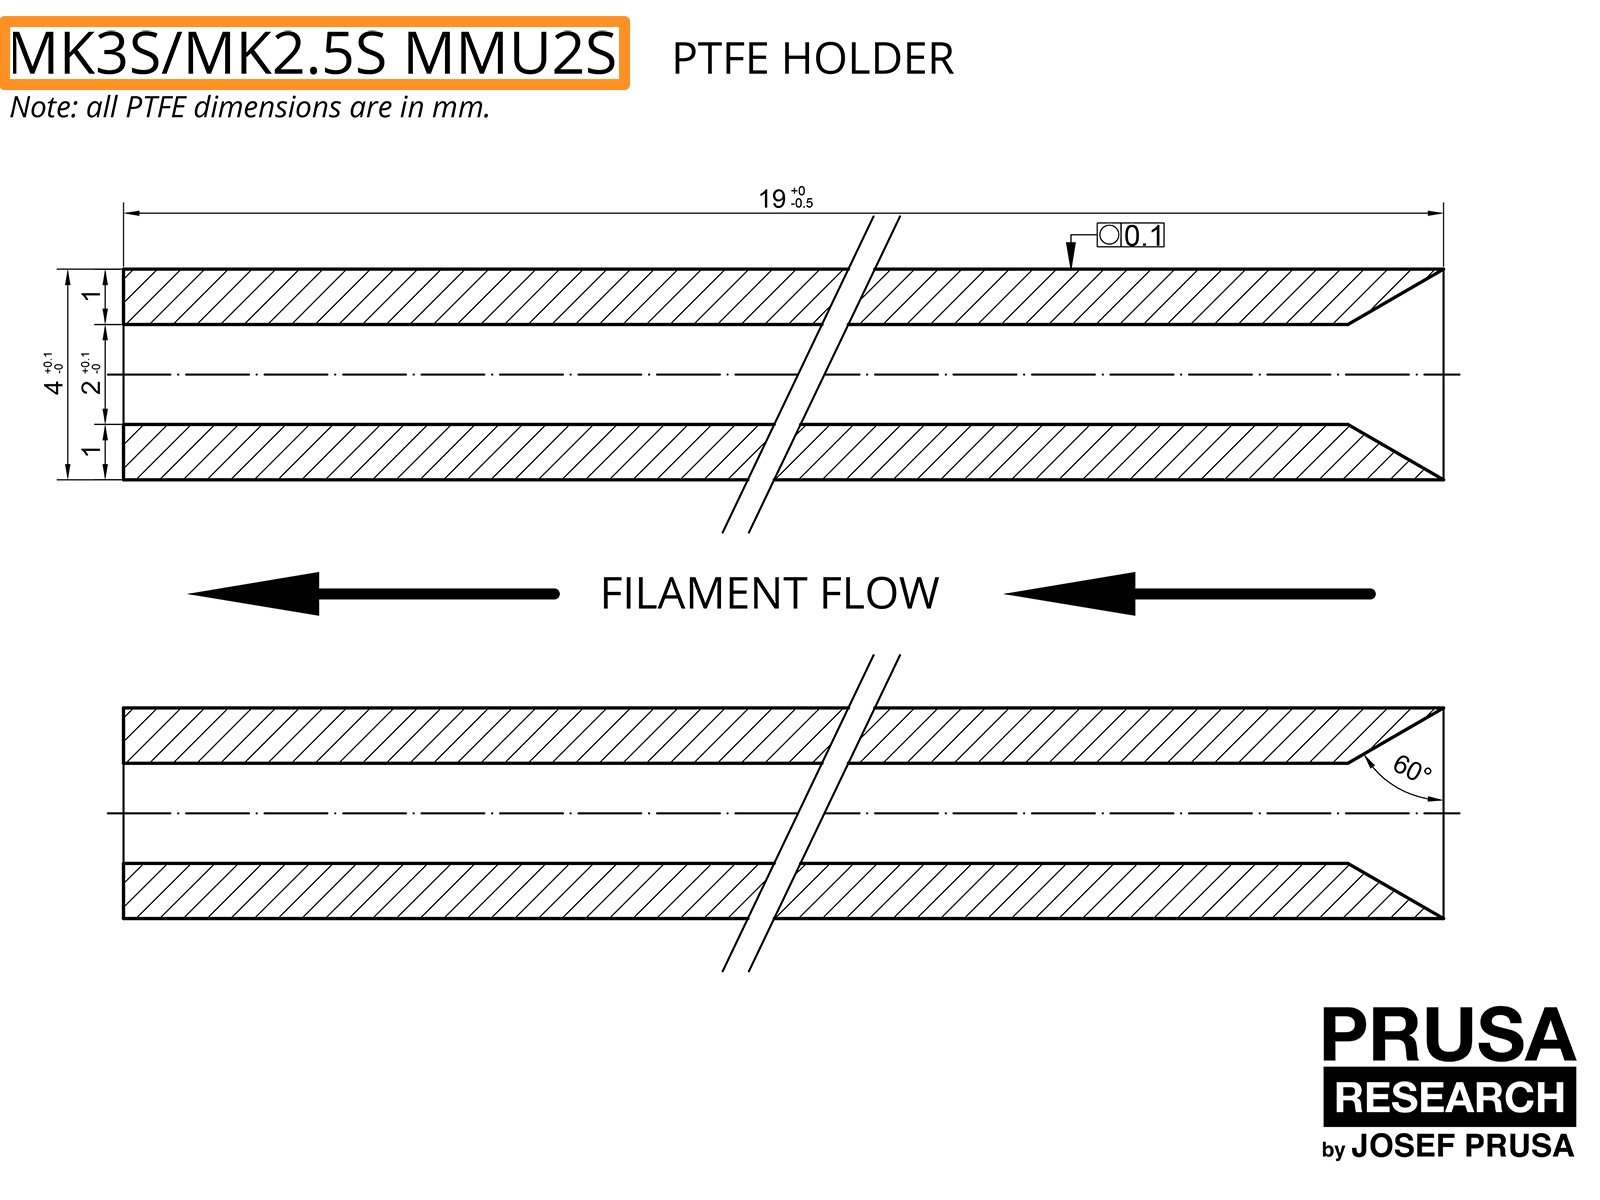 PTFE para la MK3S/MK2.5S MMU2S (parte 1)